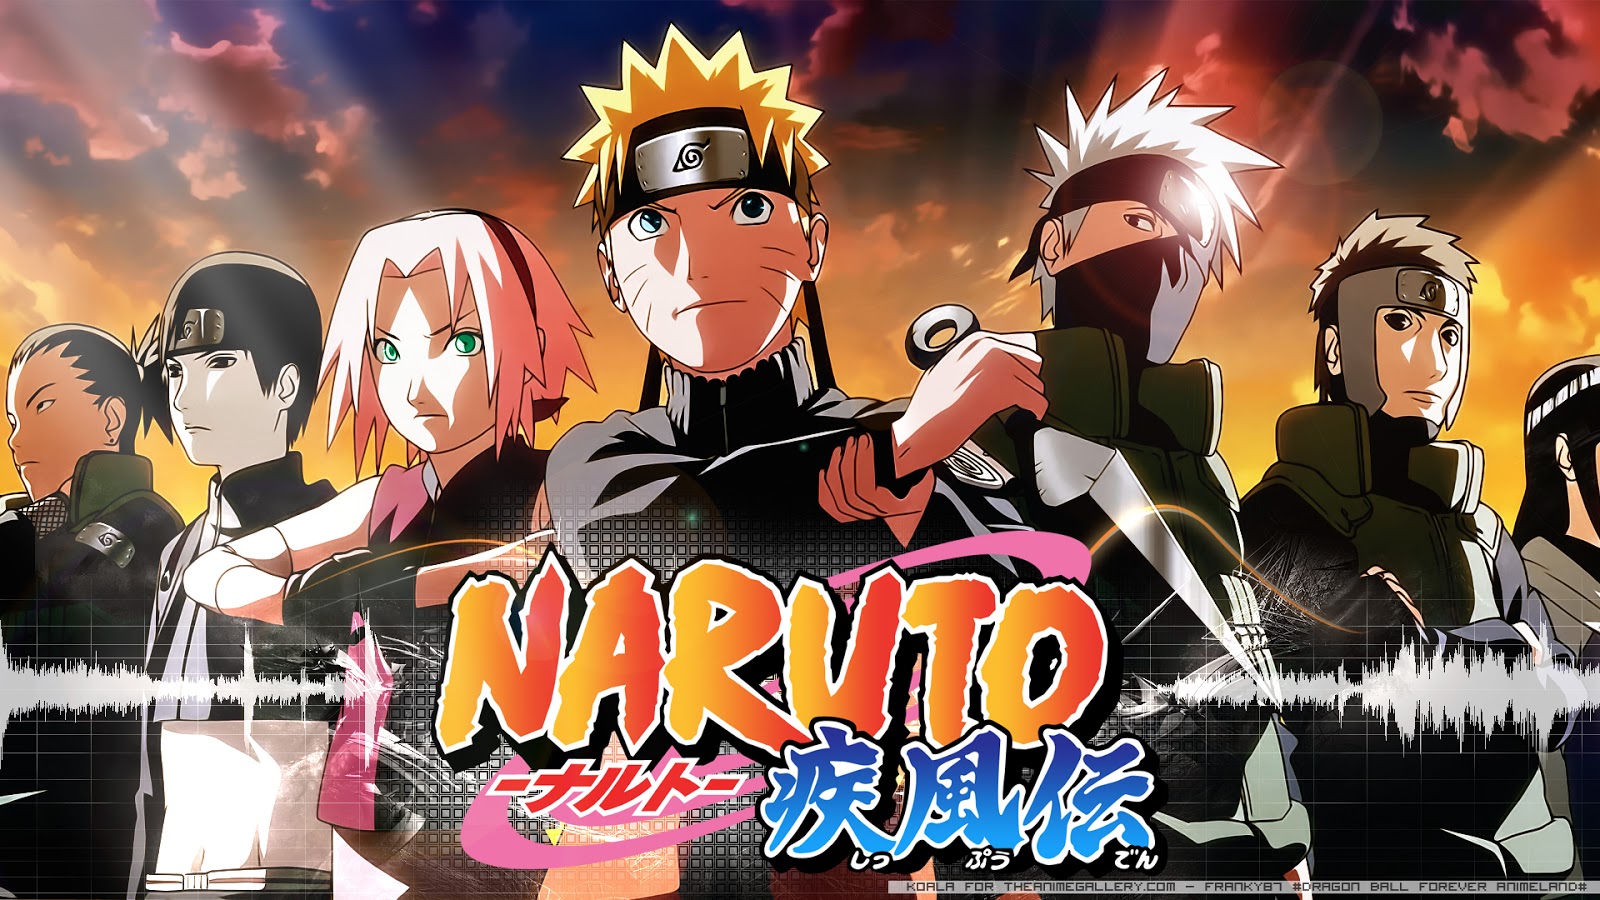 Where To Download Naruto English Episodes